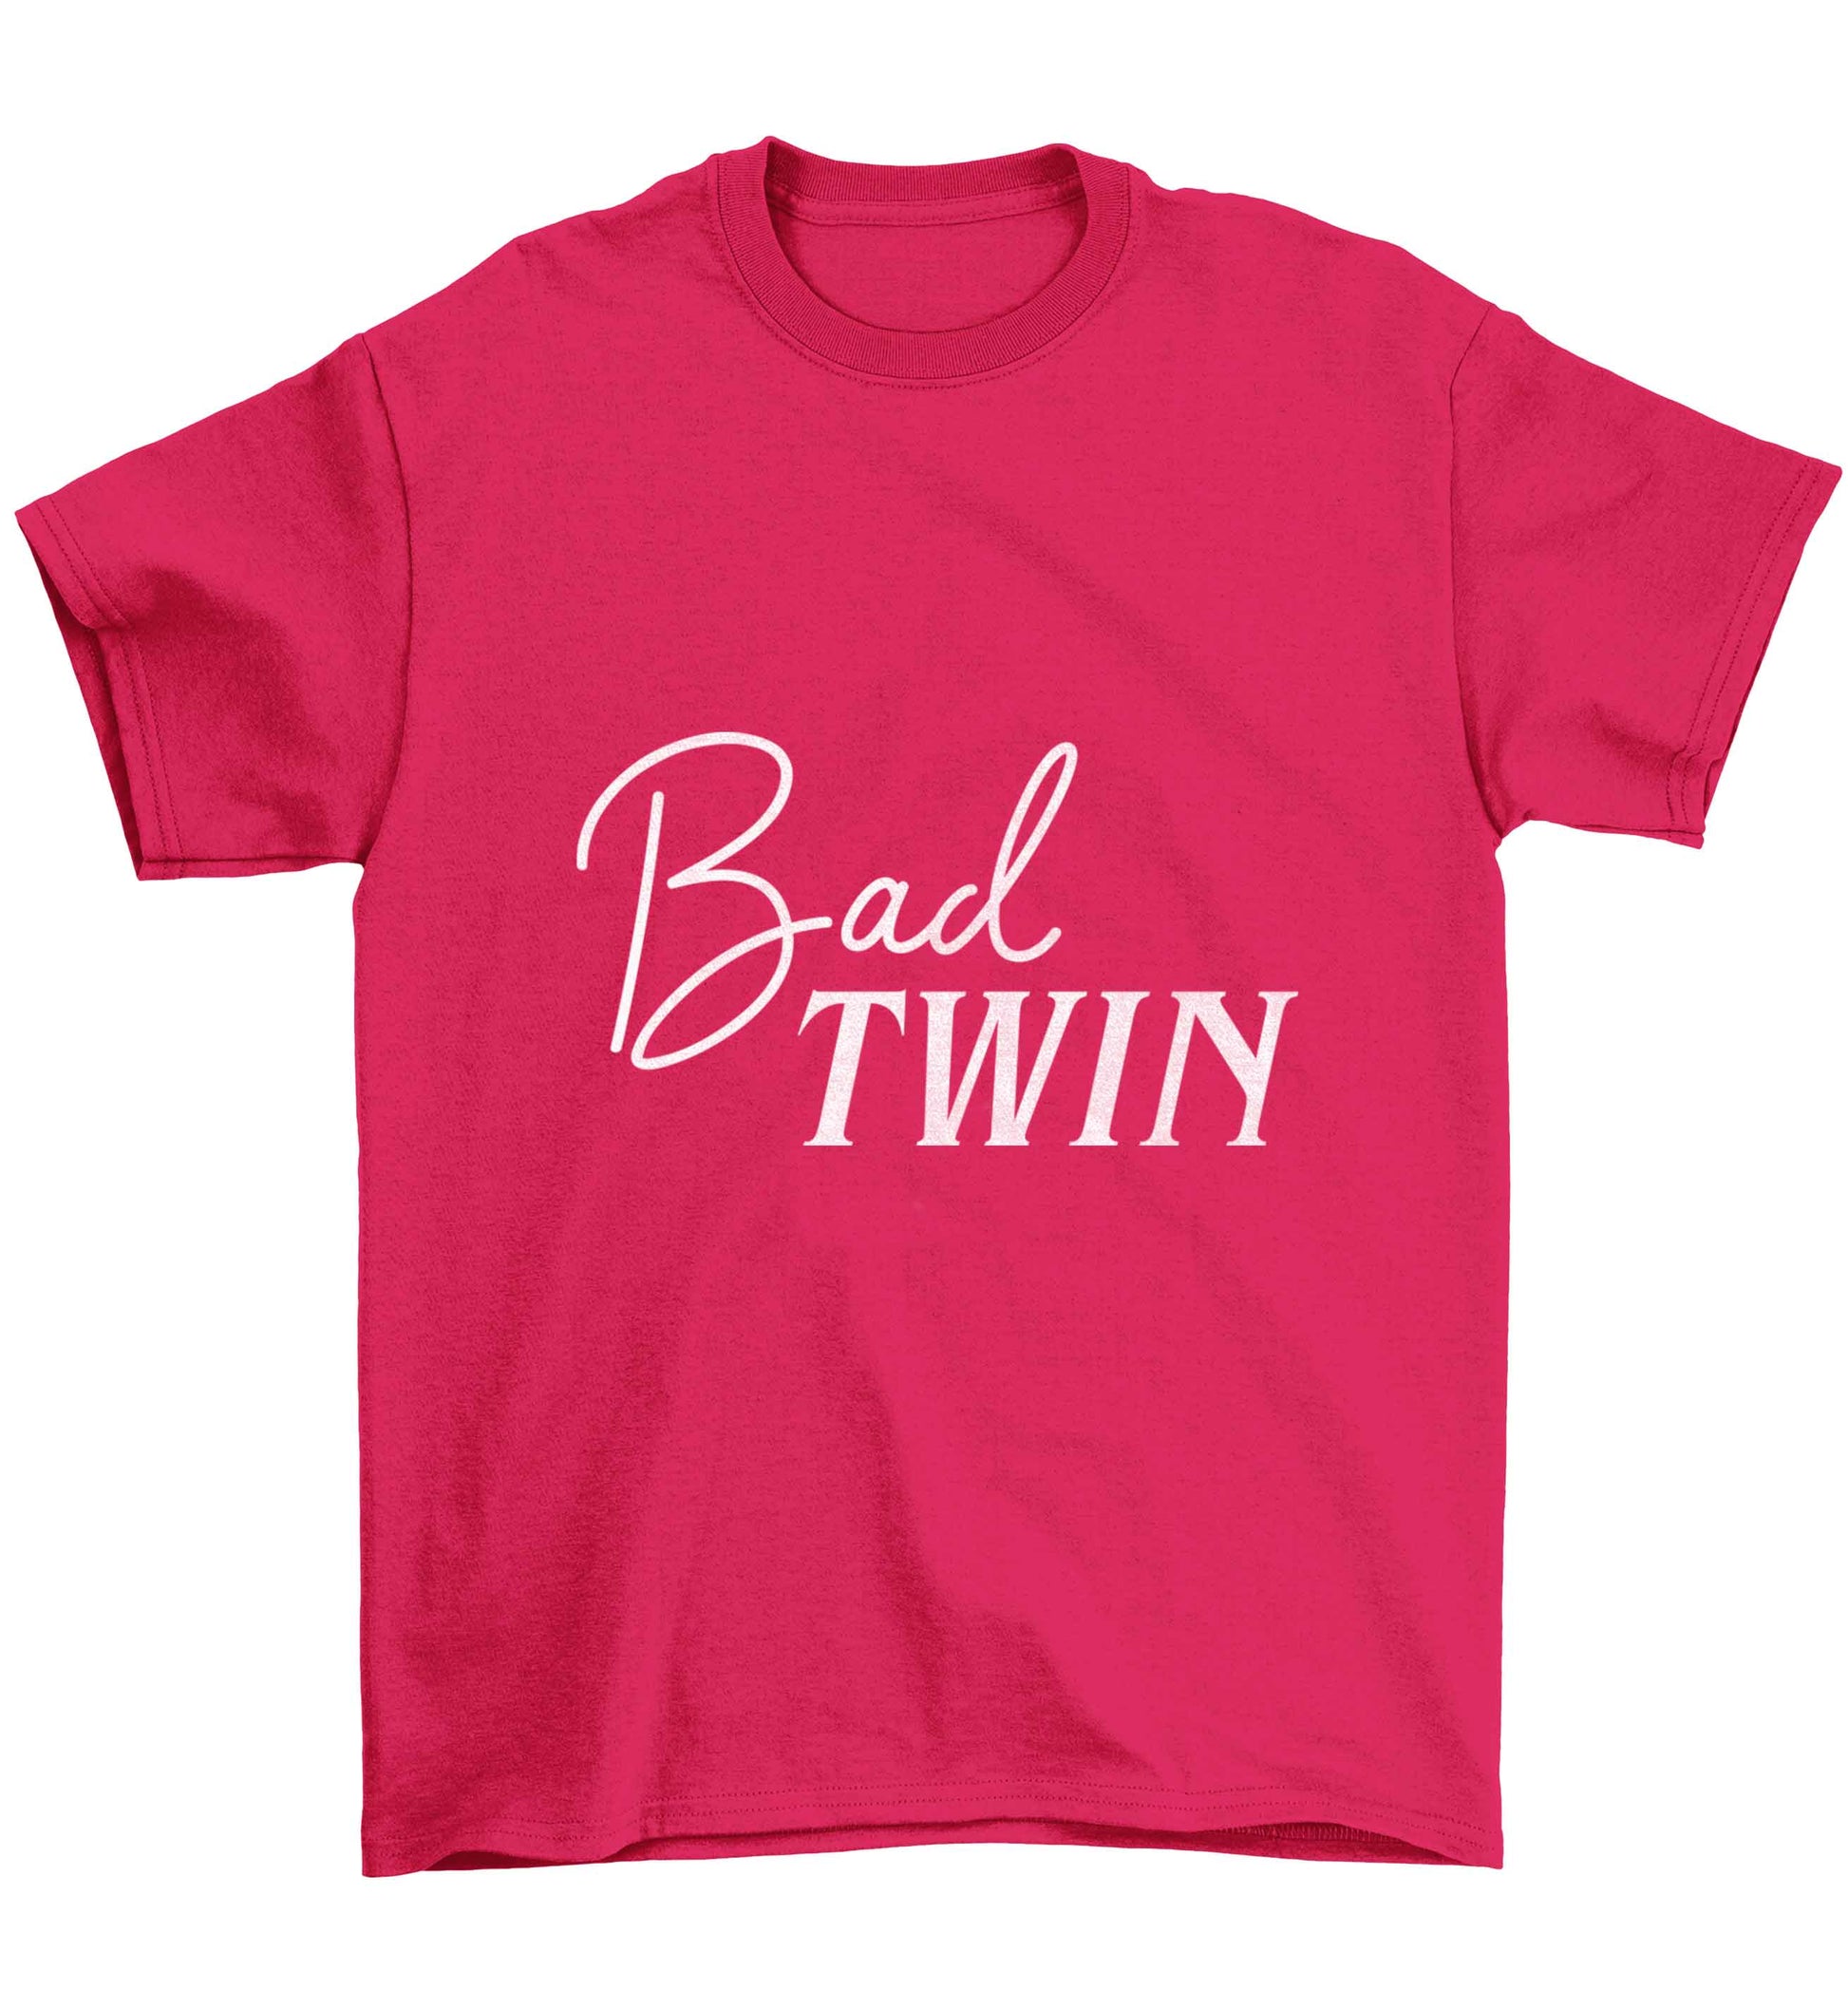 Bad twin Children's pink Tshirt 12-13 Years